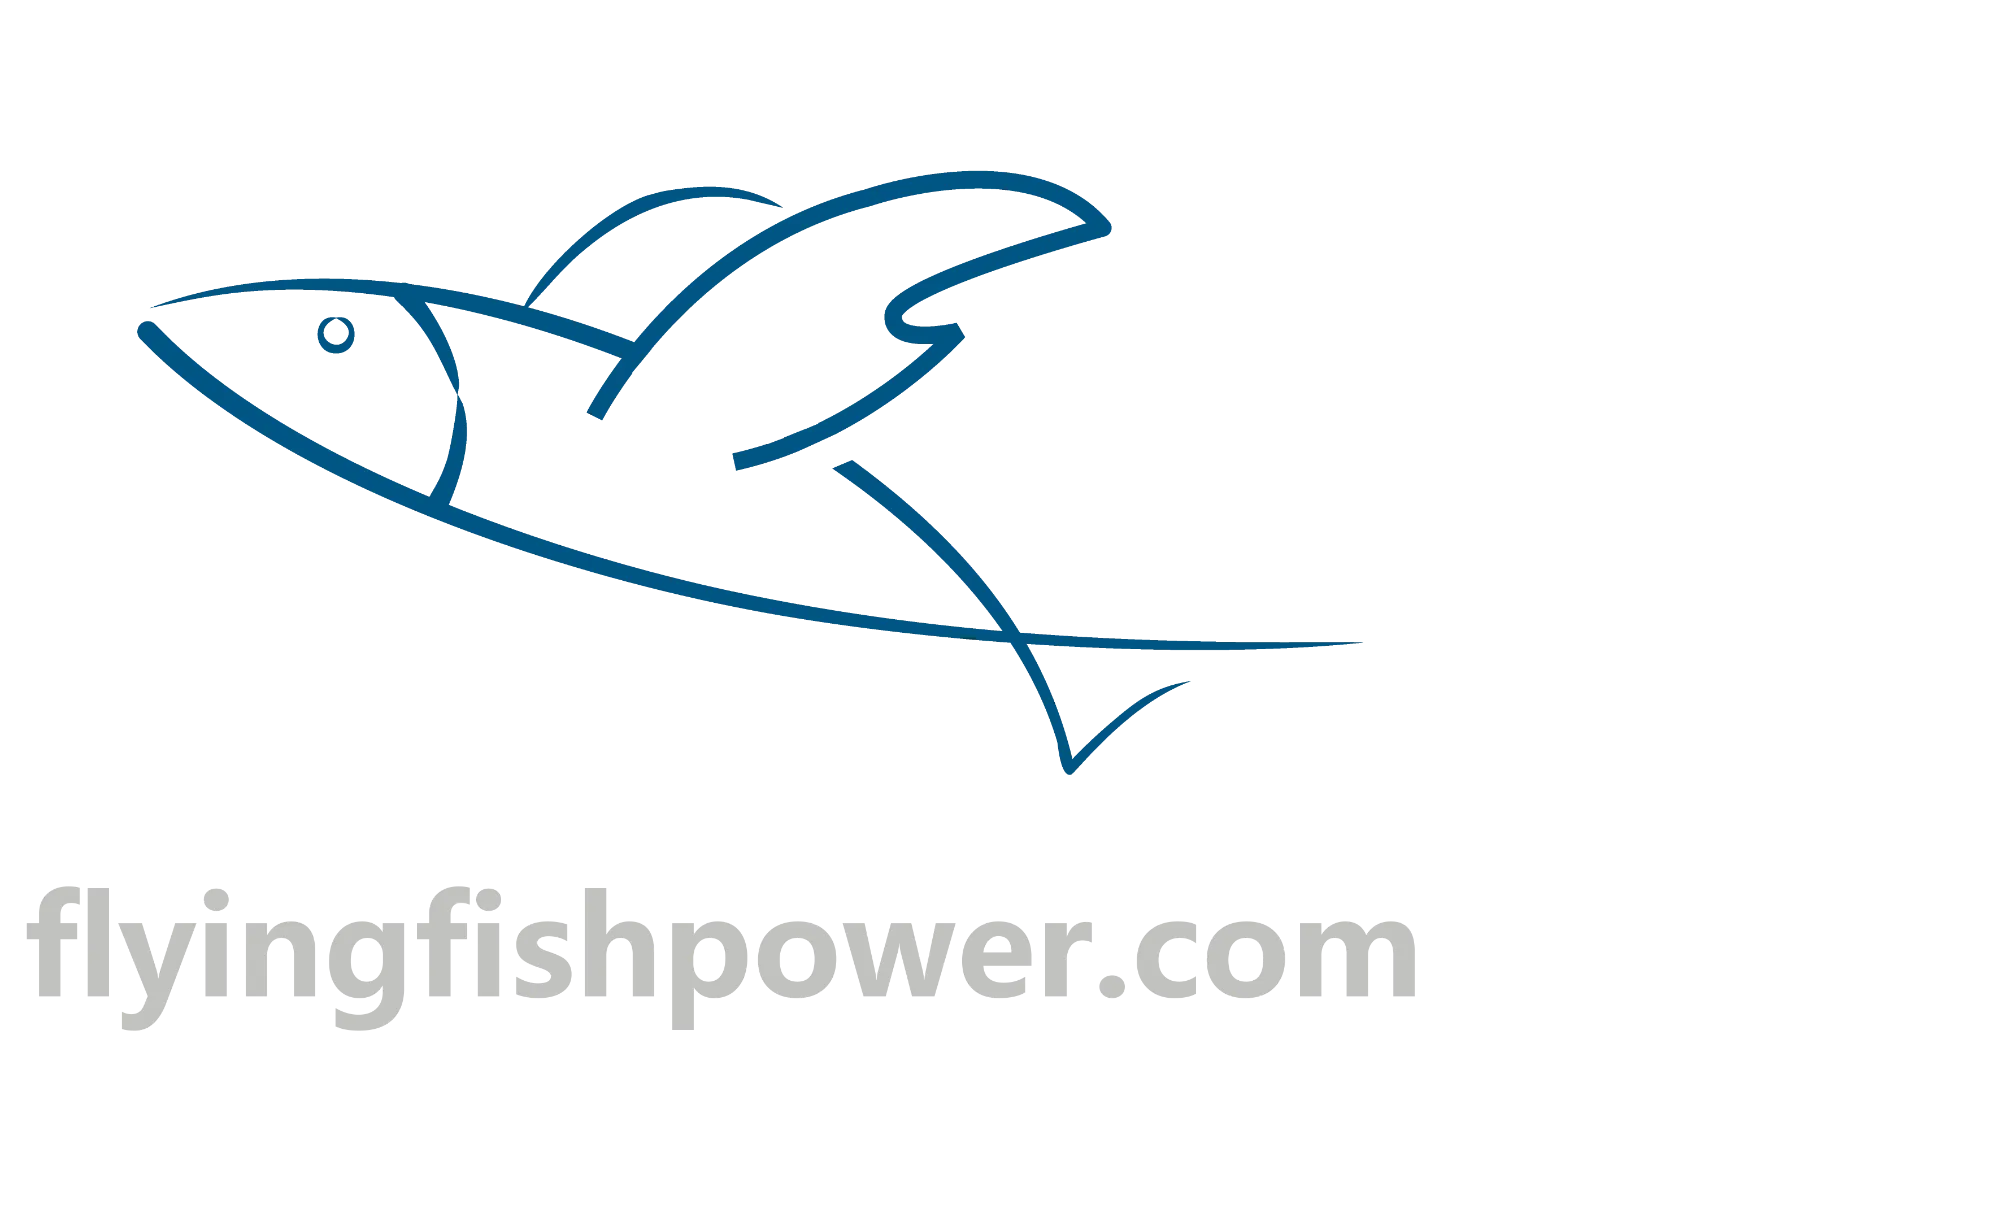 Shiyan Flyingfish Power Co., Ltd.